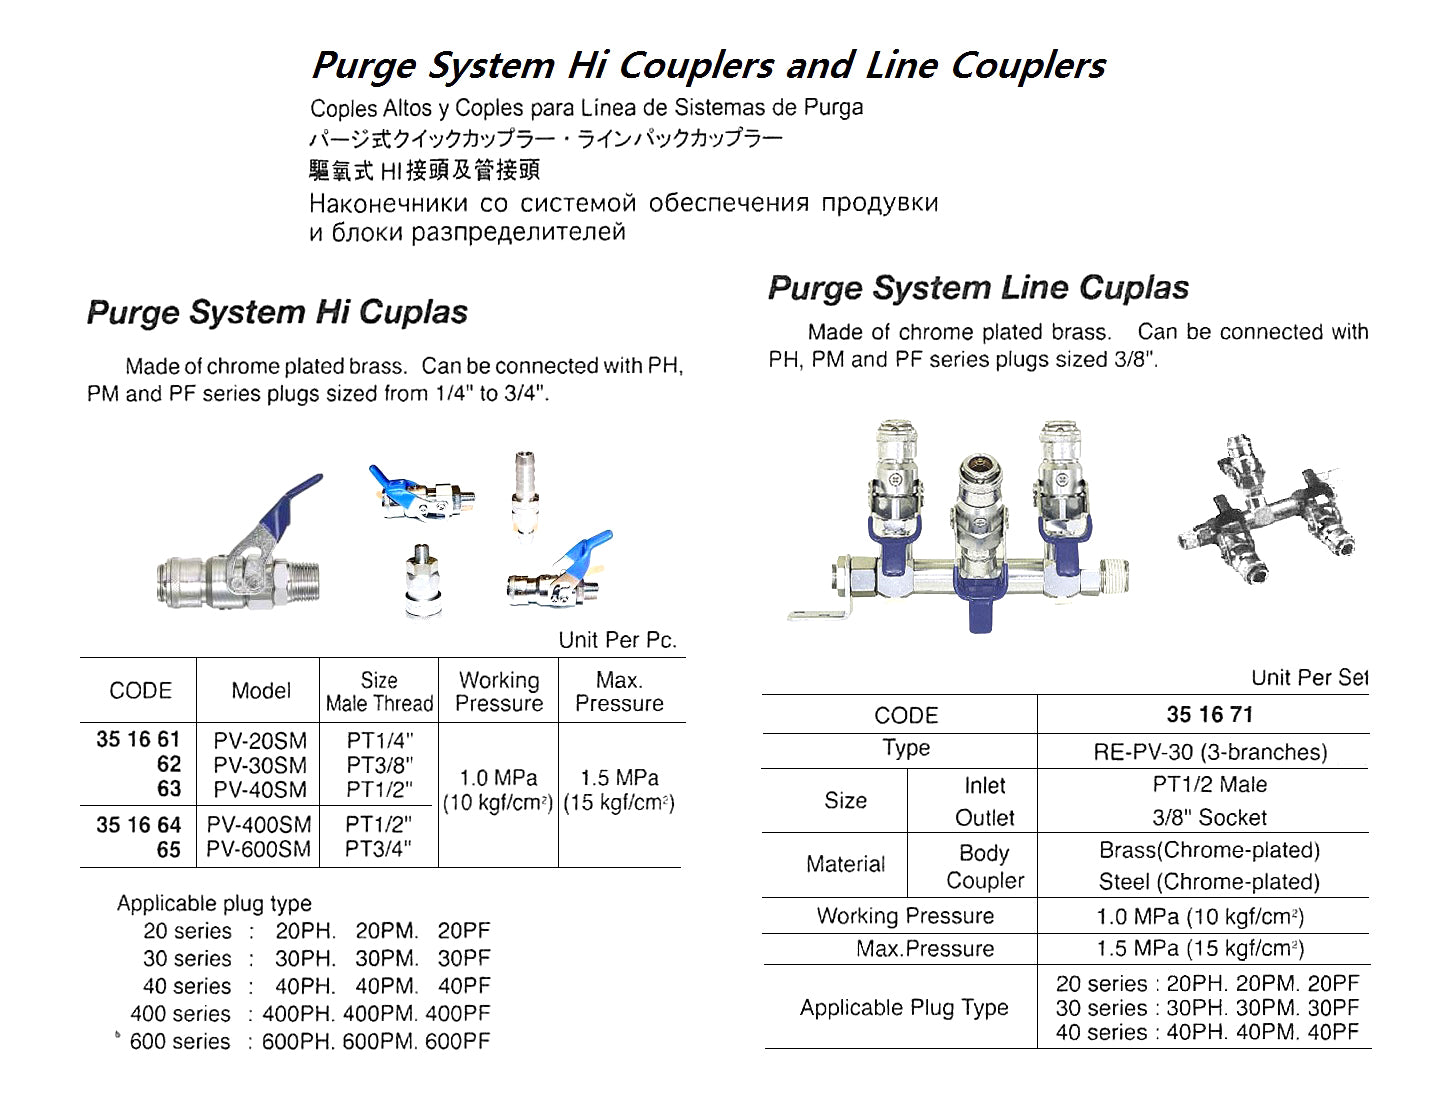 351664-HI COUPLER PURGE SYSTEM, PV-400SM MALE R1/2?